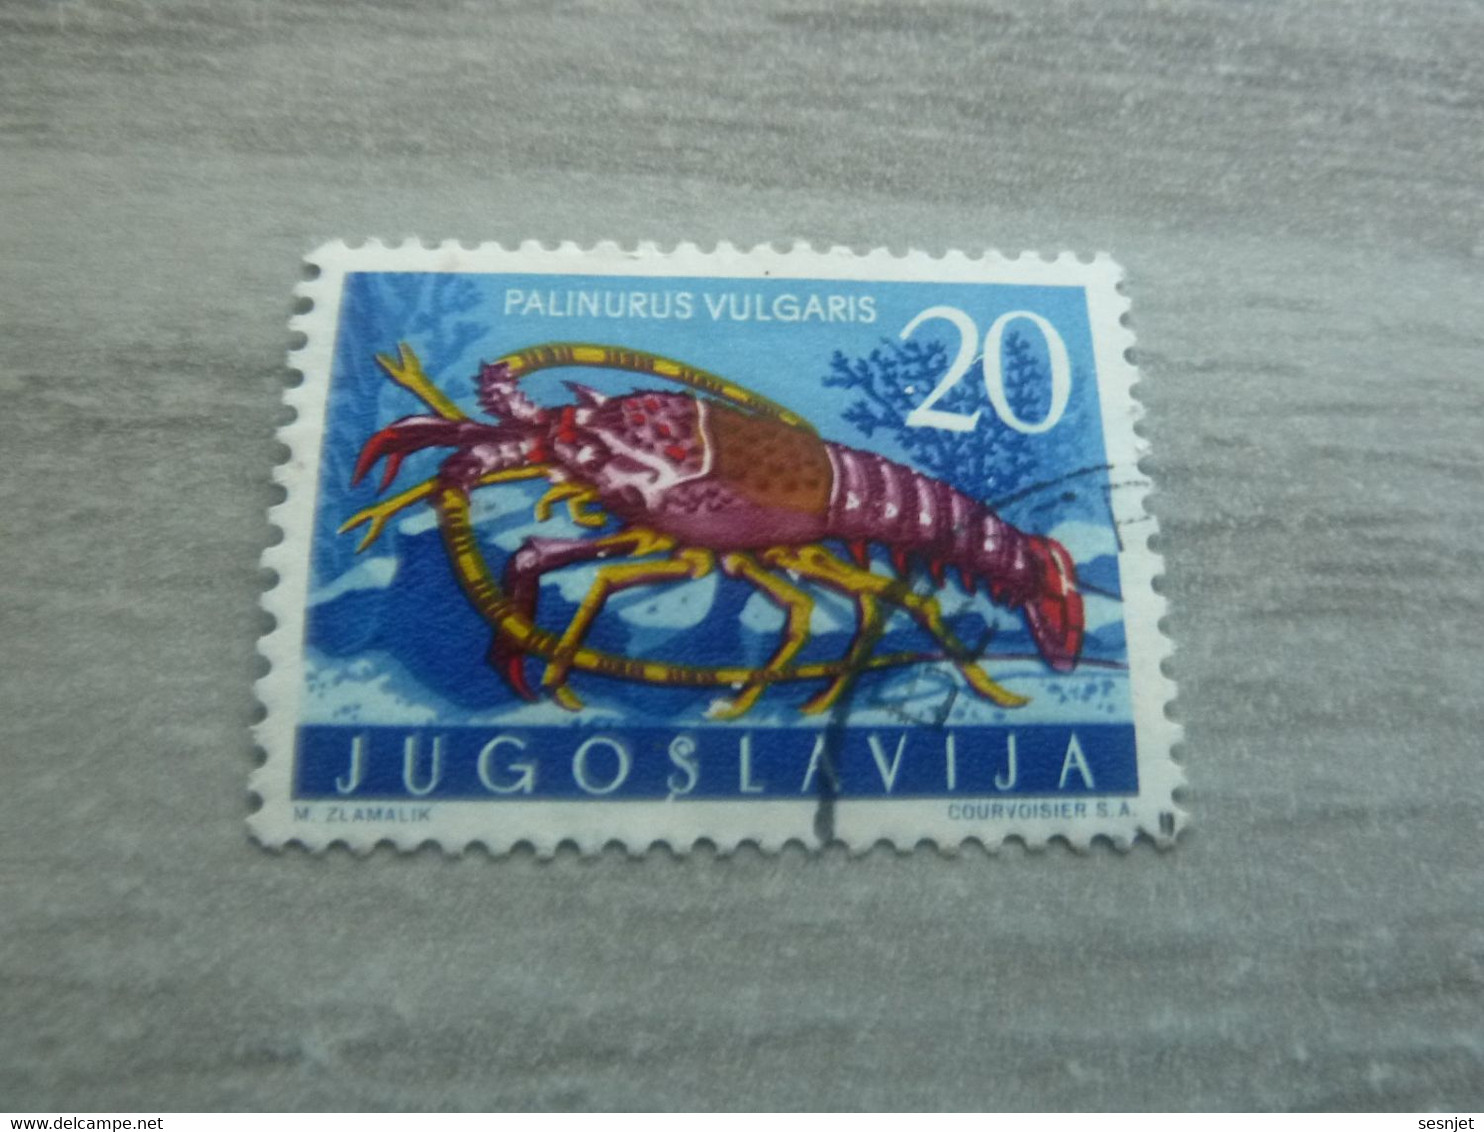 Jugoslavija - Palinurus Vulgaris - Courvoisier - Val 20 - Multicolore - Oblitéré - Année 1971 - - Used Stamps